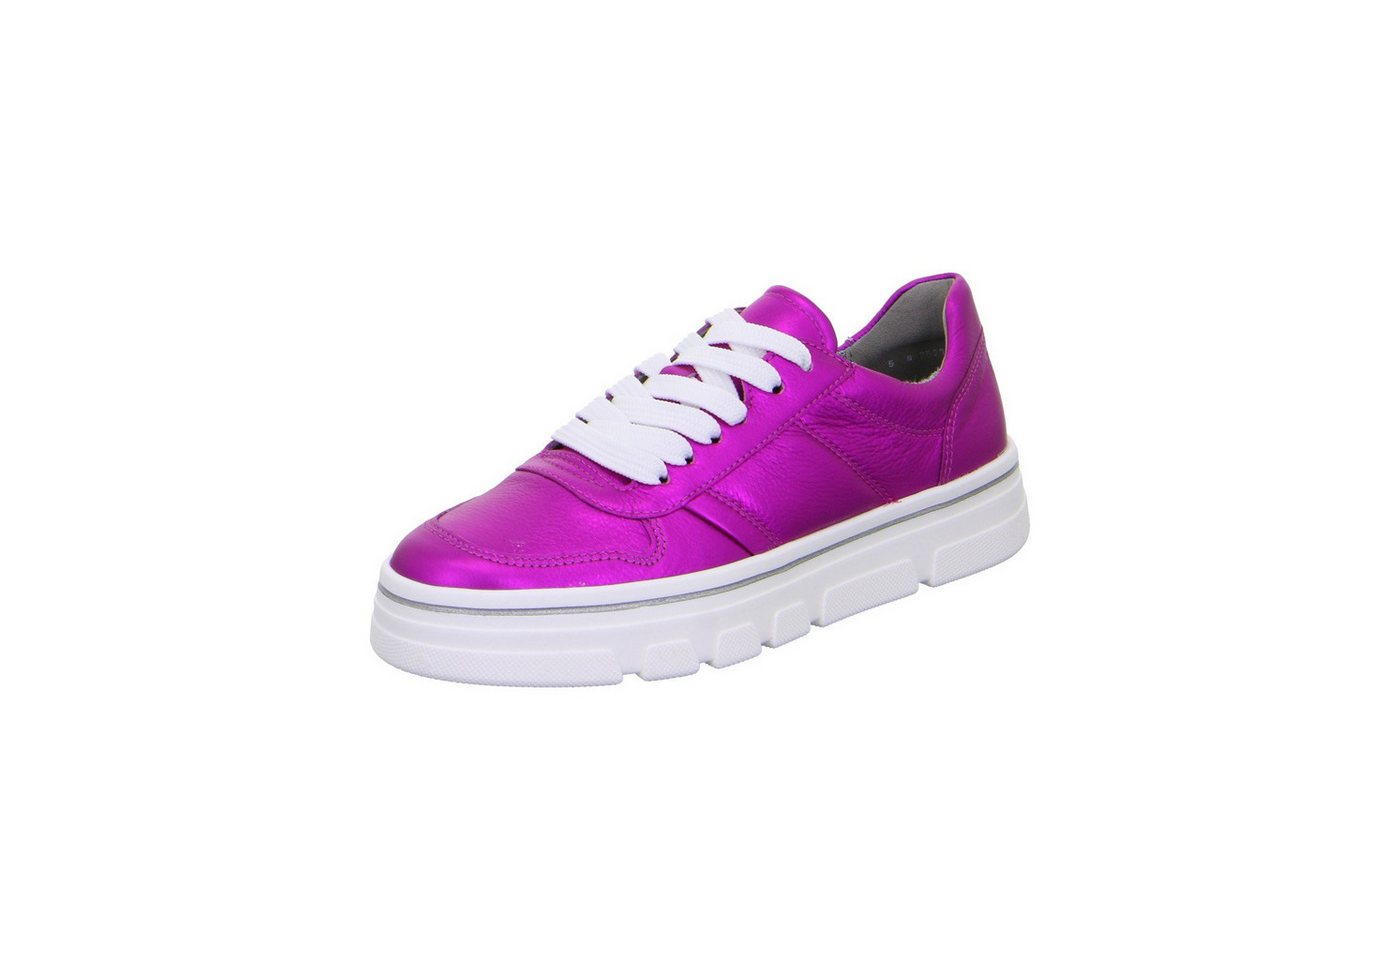 Ara Canberra - Damen Schuhe Sneaker Schnürer Glattleder rosa von Ara